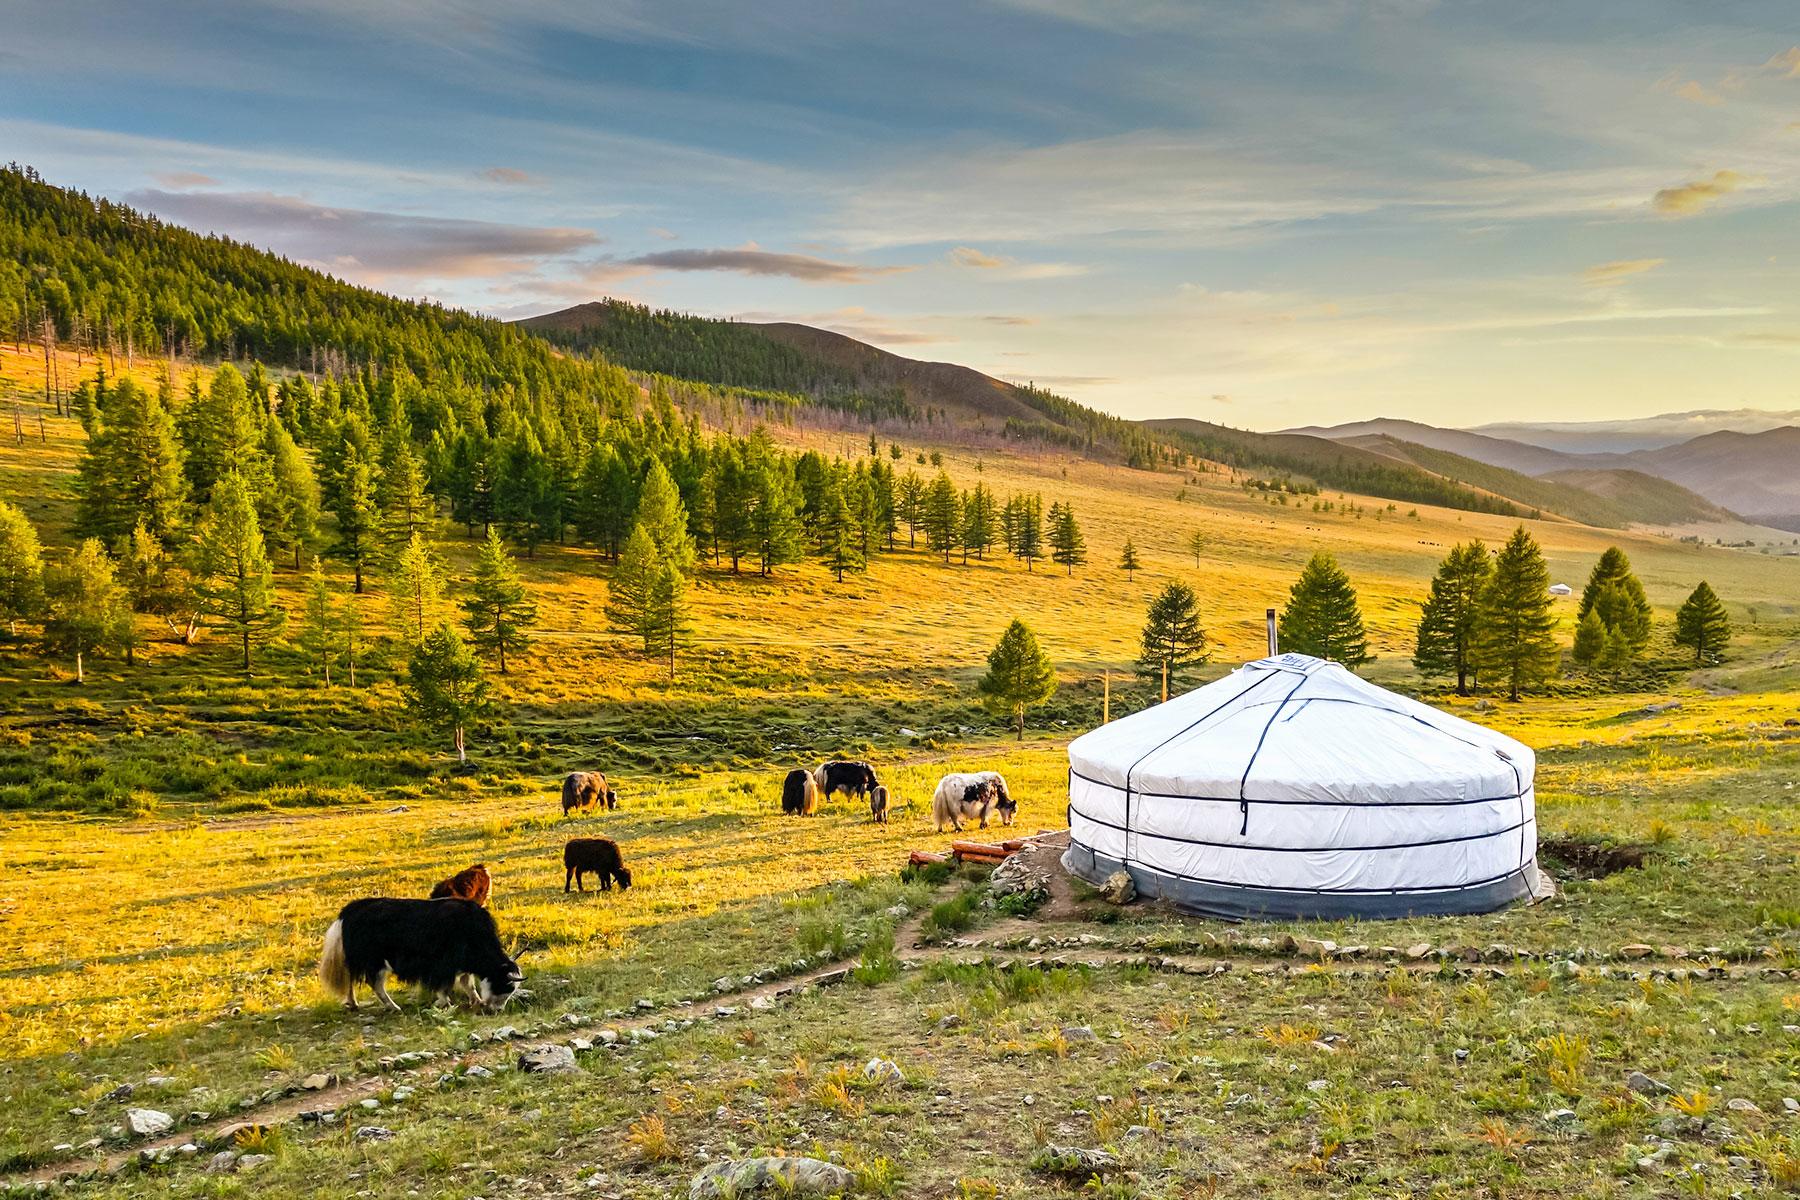 mongolia travel advisory